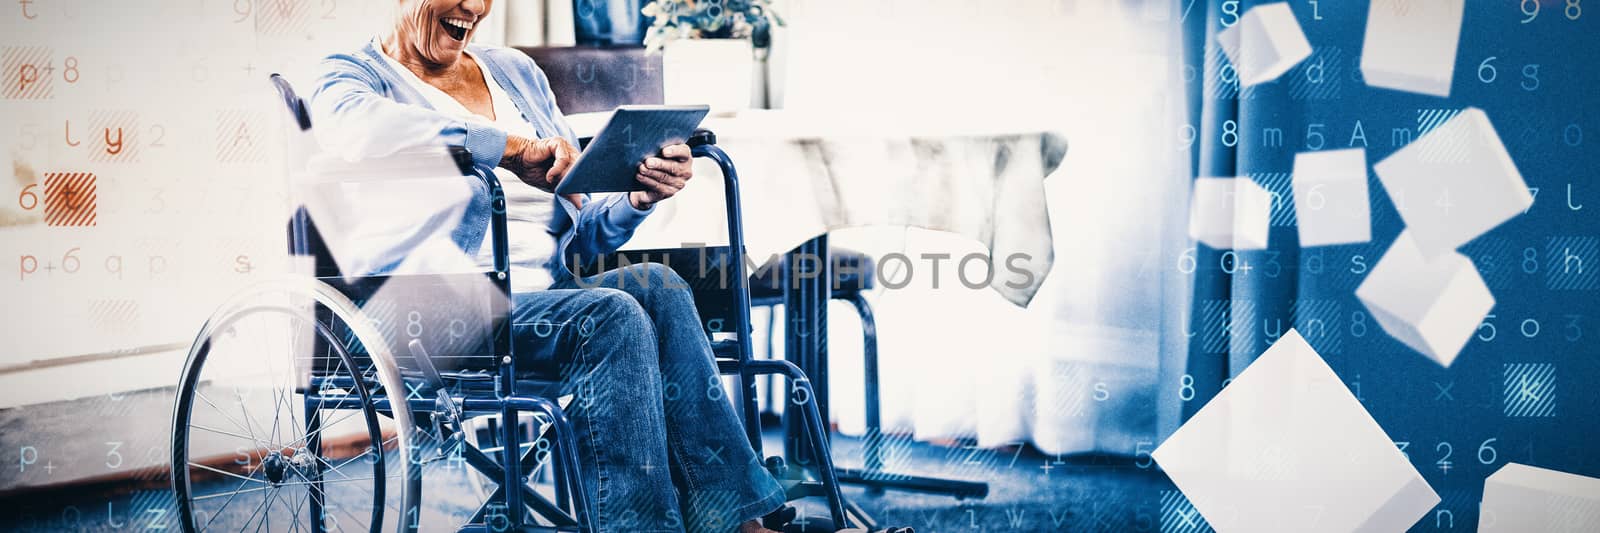 Excited senior woman on wheelchair using digital tablet by Wavebreakmedia